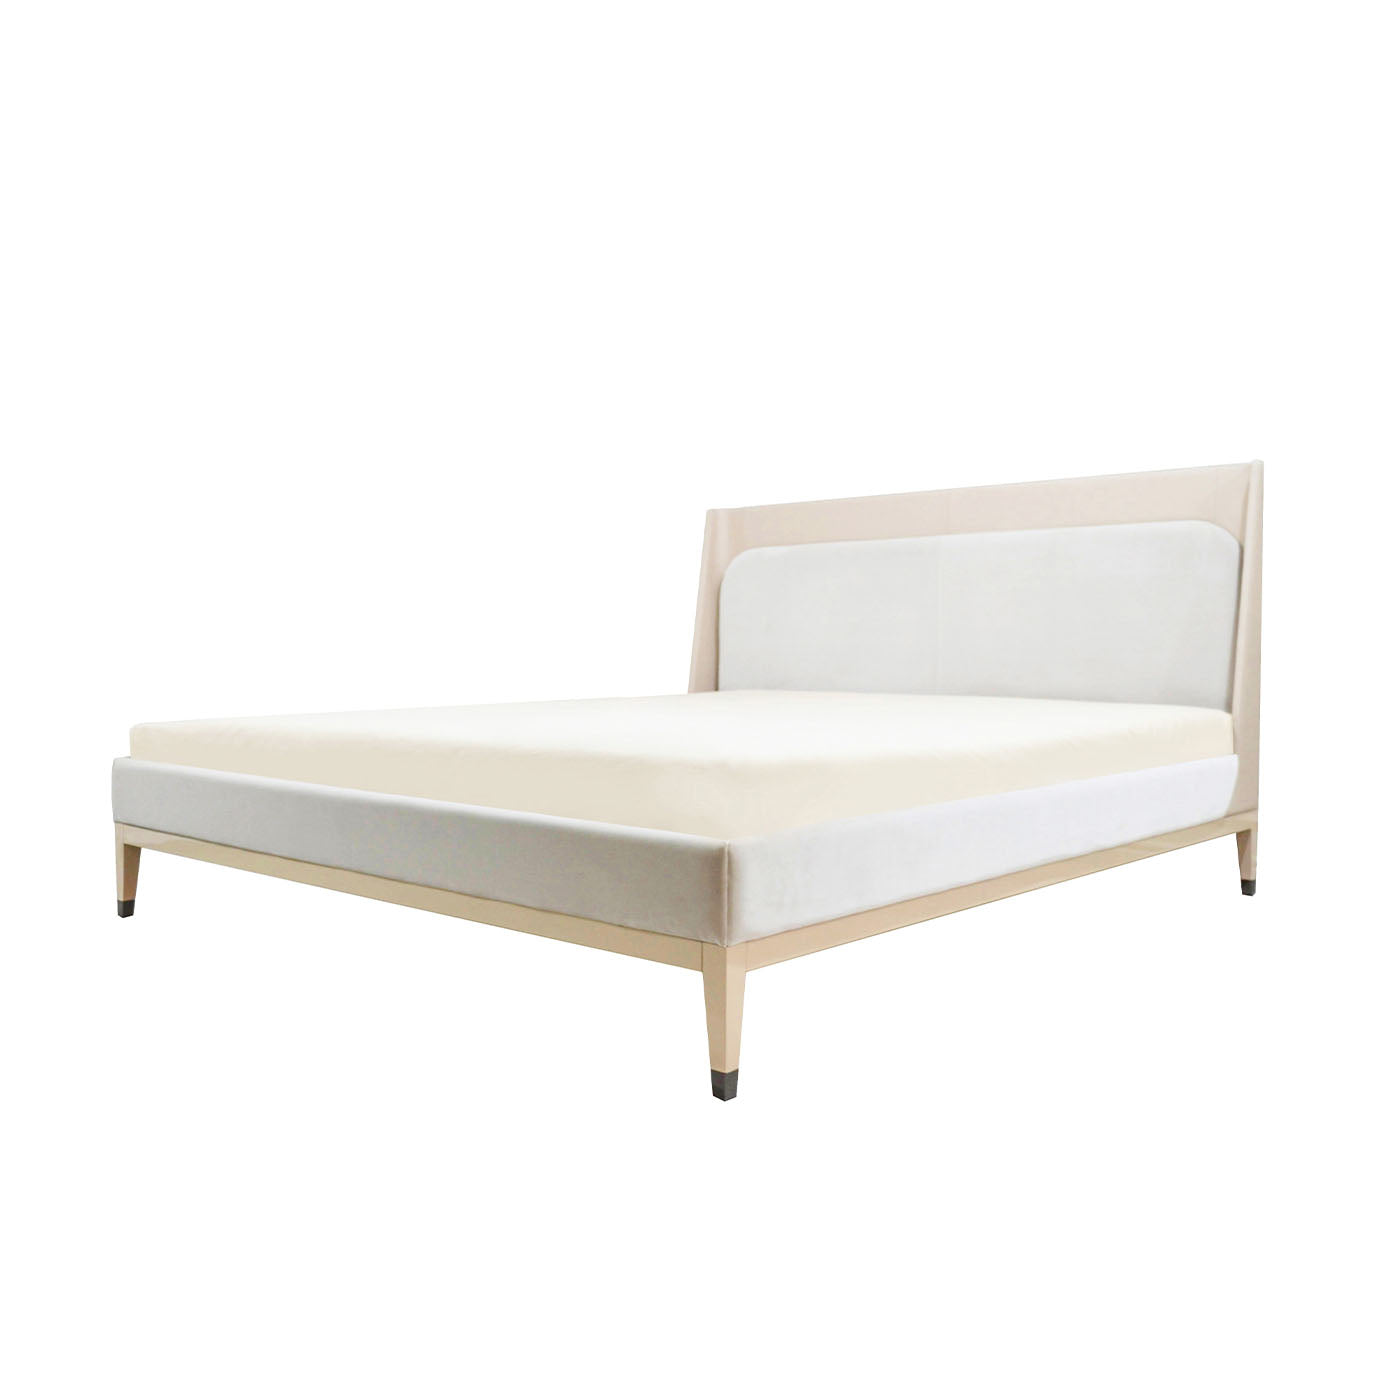 Italian Bed Upholstered Nubuck and Velvet with Wooden Legs - Alternative view 1